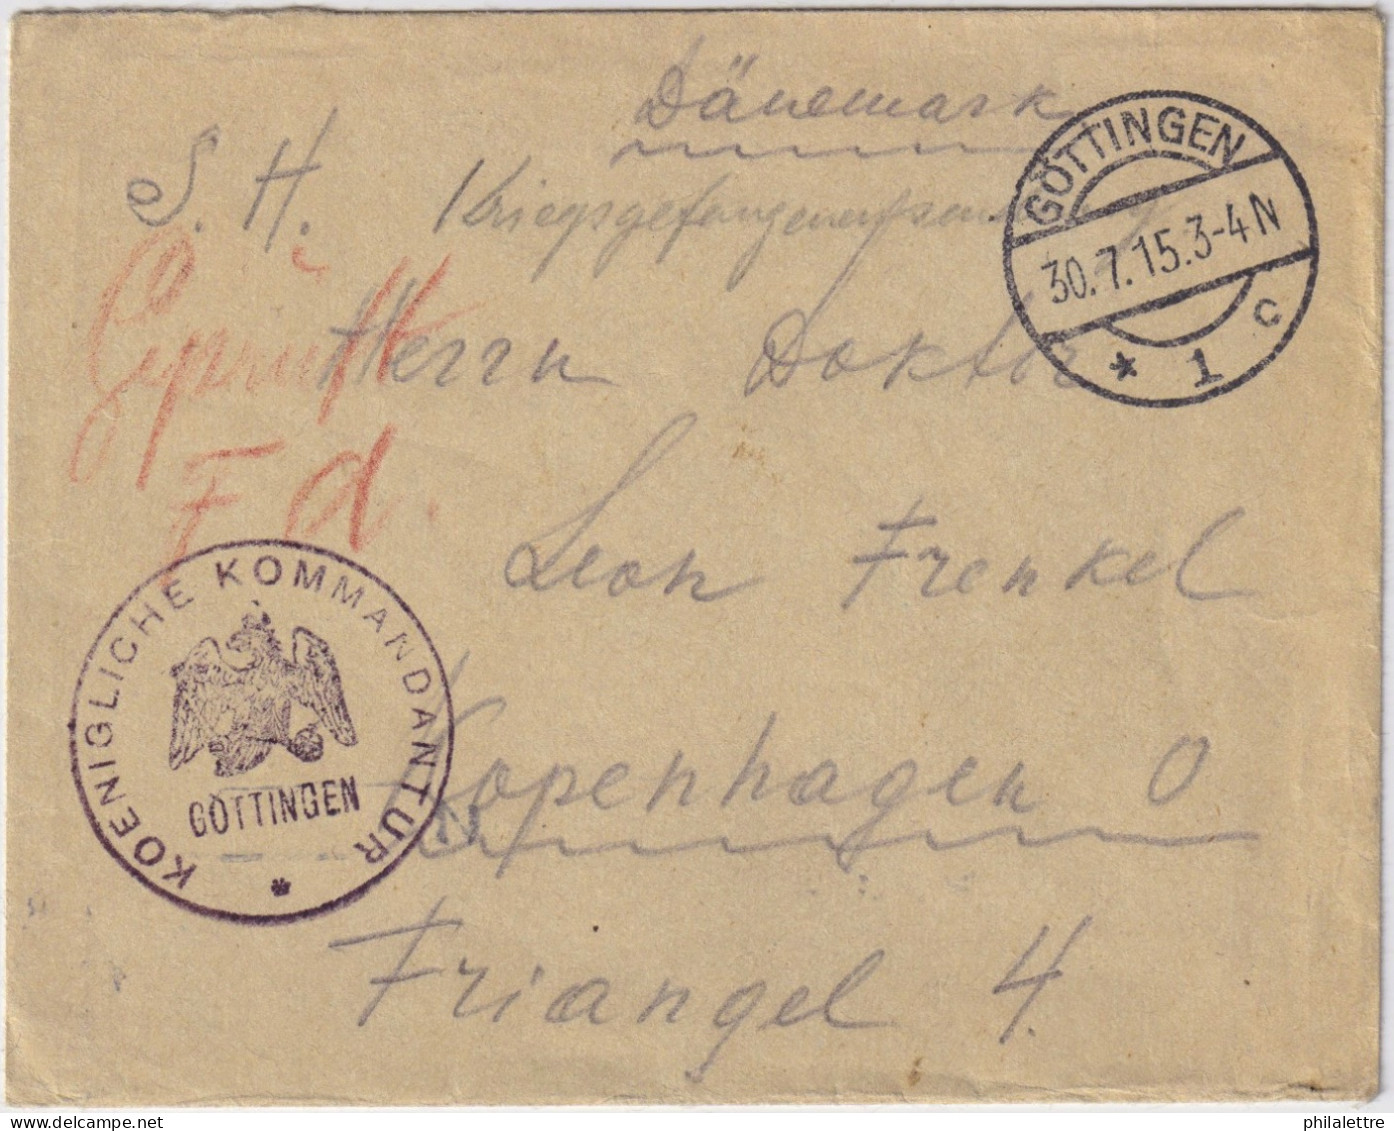 ALLEMAGNE / GERMANY - 1915 POW Cover From An NC Officer In GÖTTINGEN GFLager Addressed To COPENHAGEN, Denmark - Storia Postale